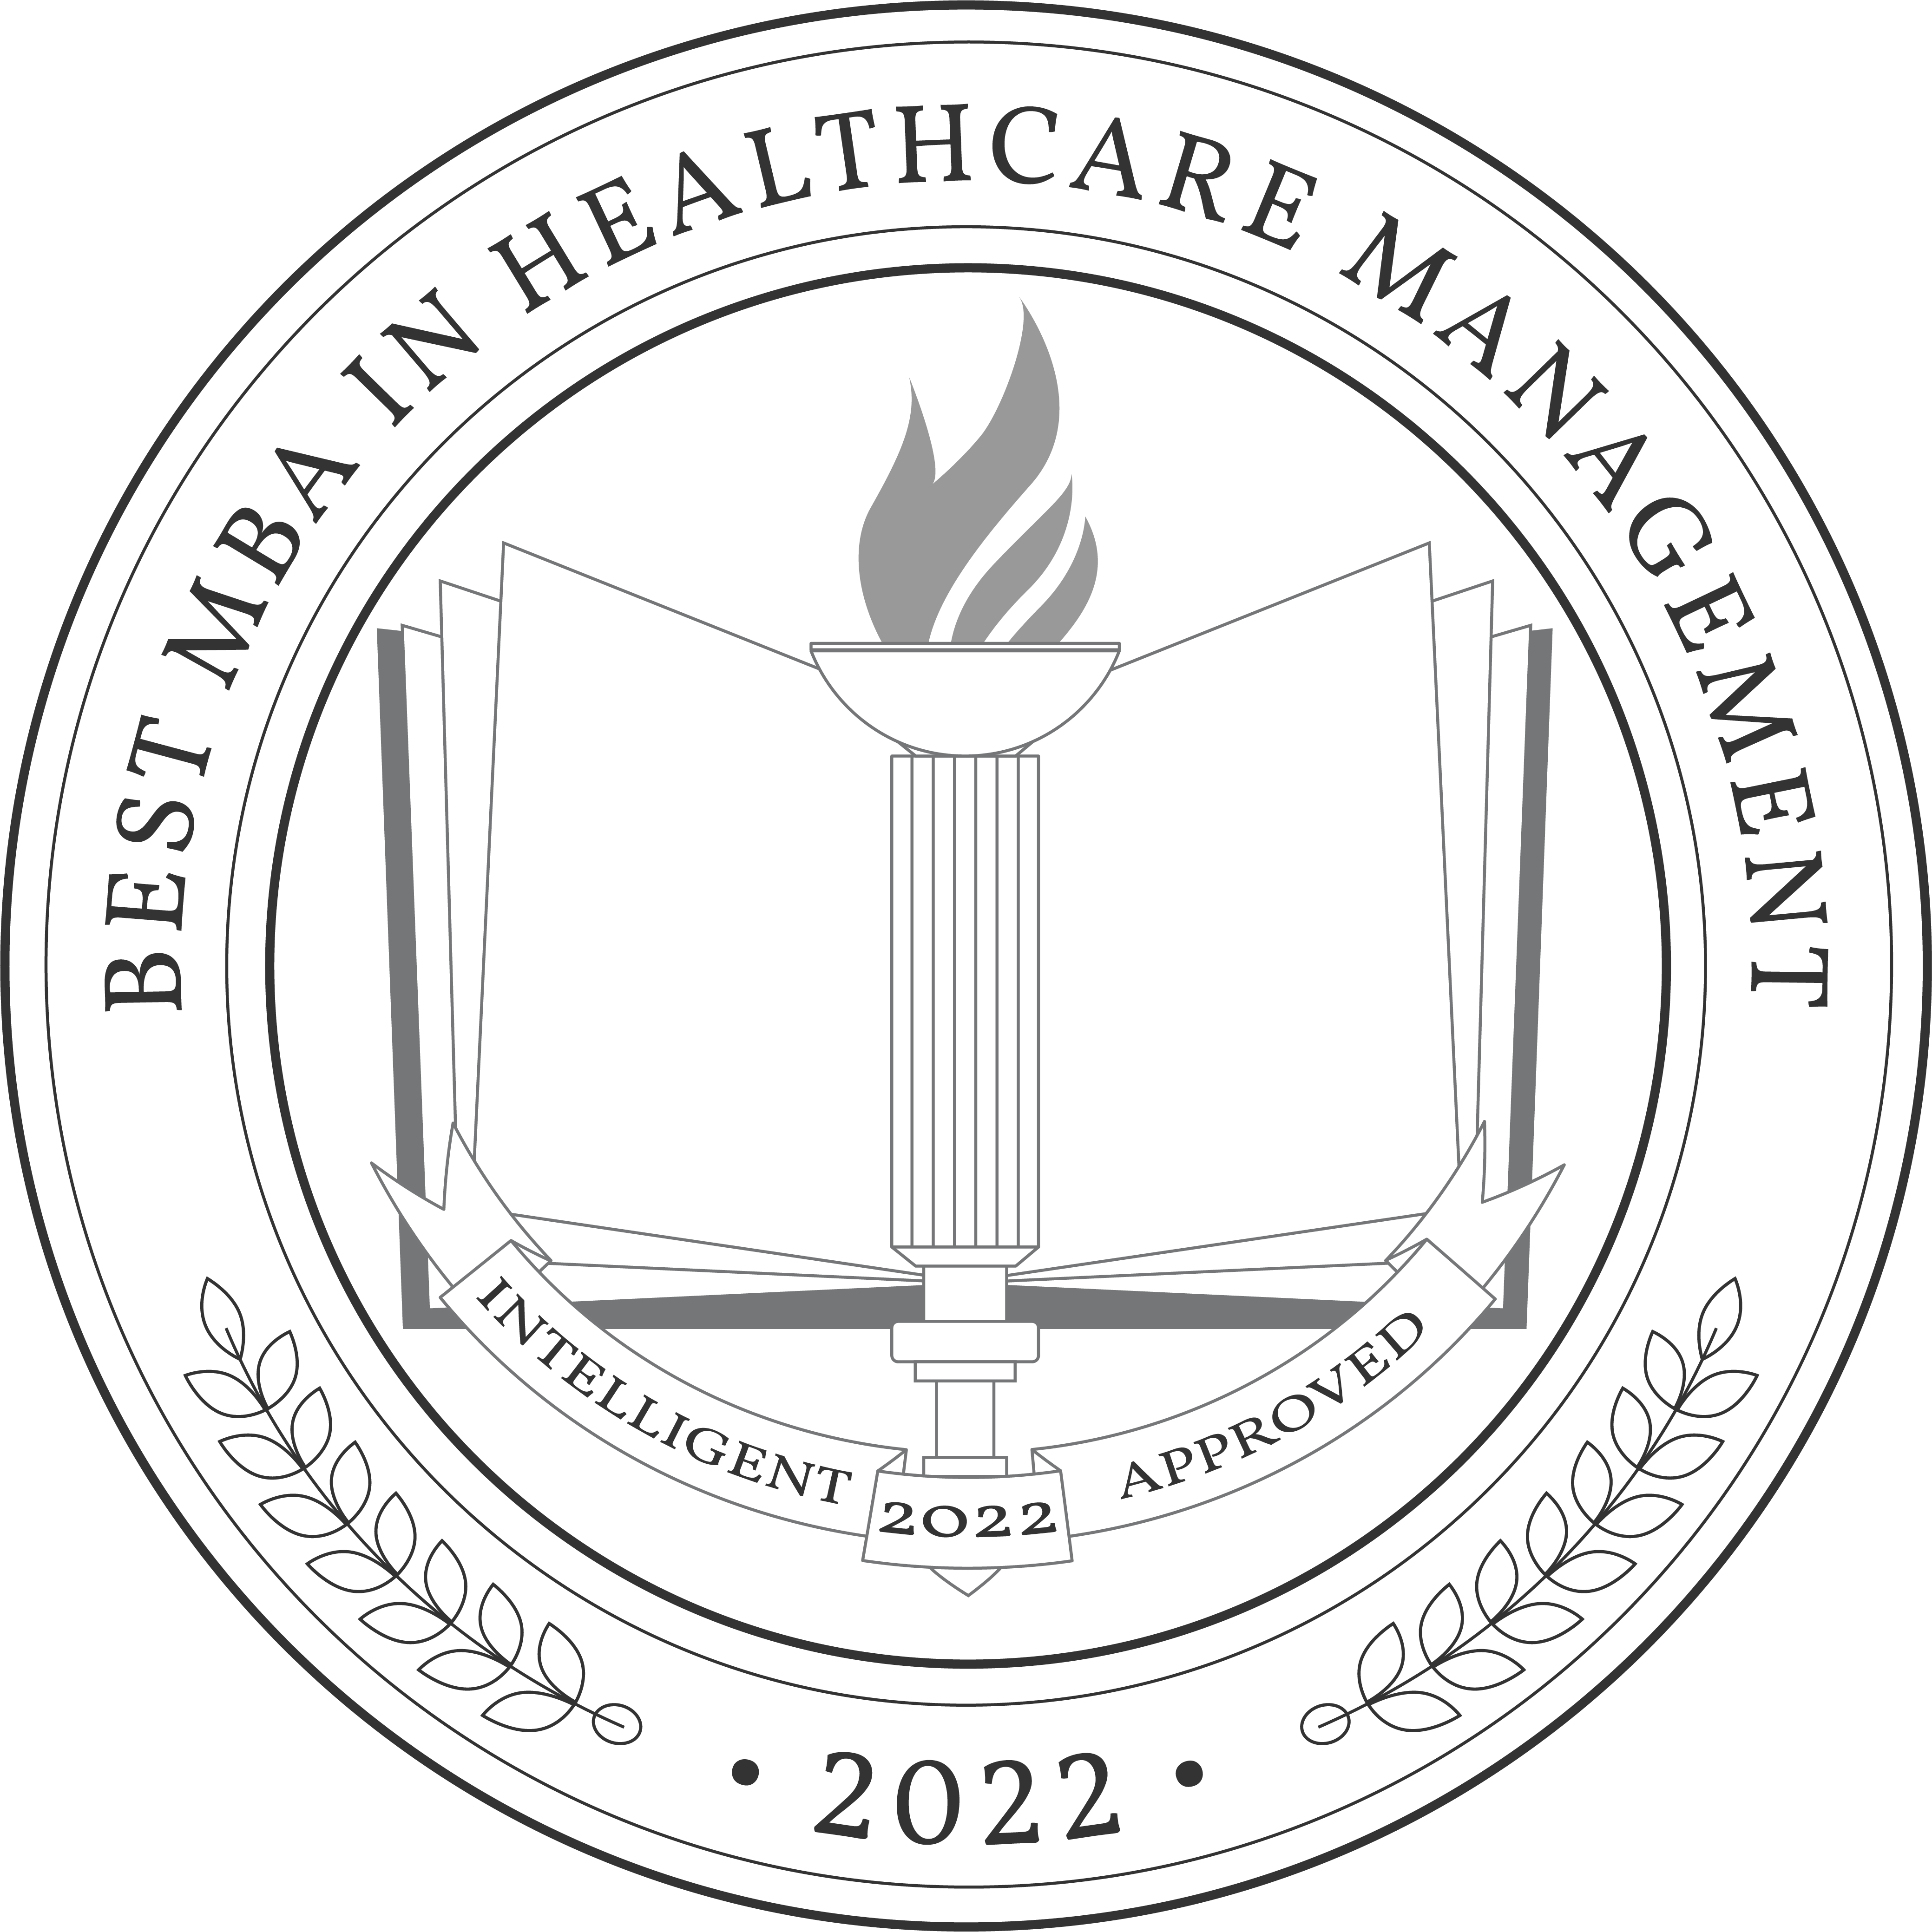 Best Online MBA in Healthcare Management Degree Programs